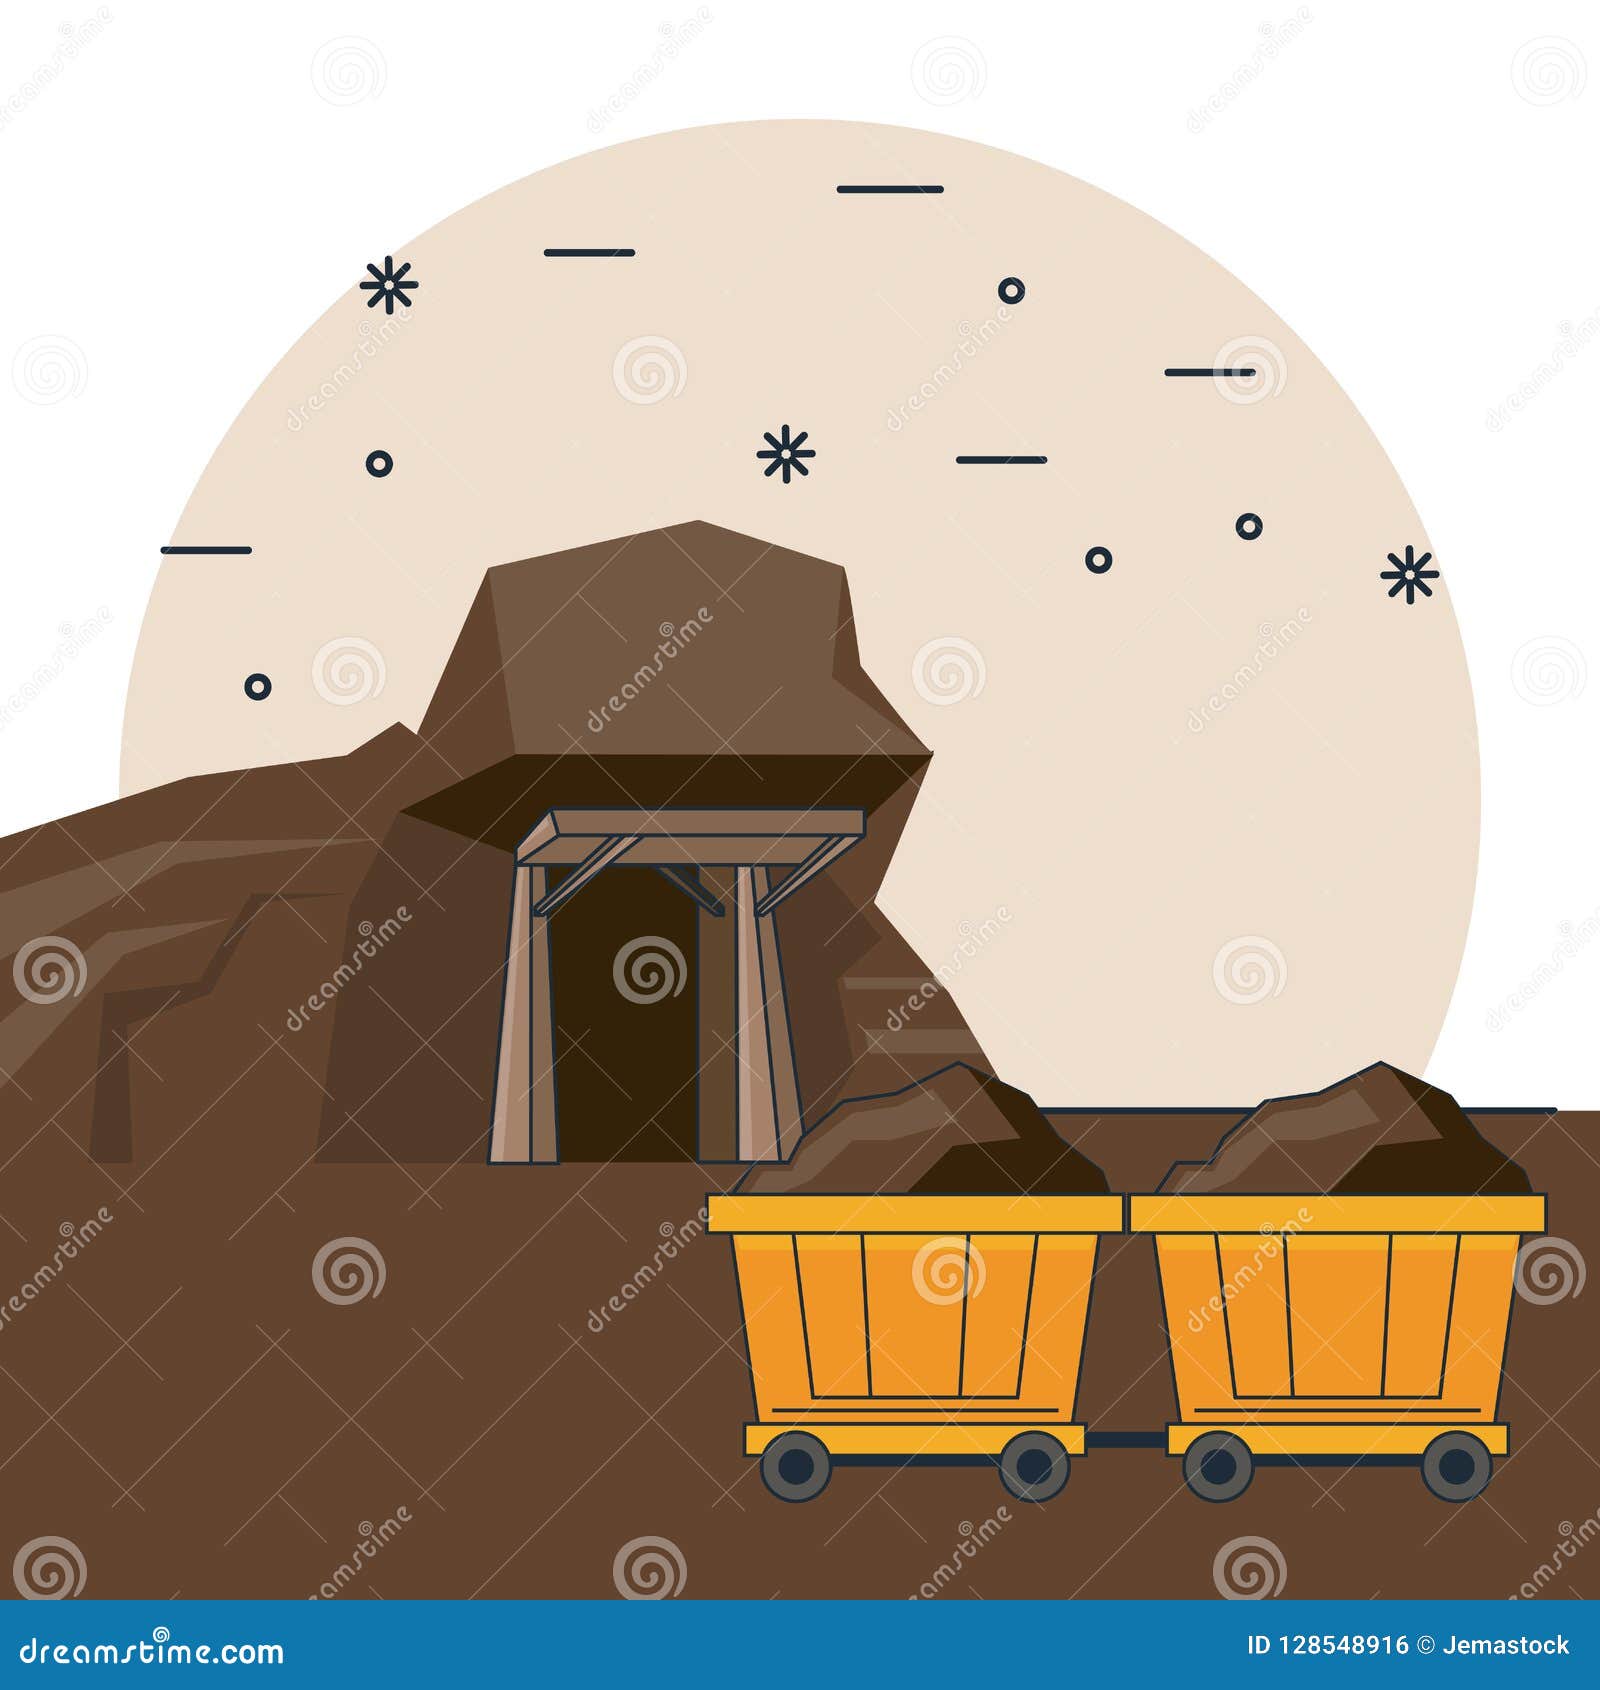 Diamonds mining cartoons stock vector. Illustration of rock - 128548916